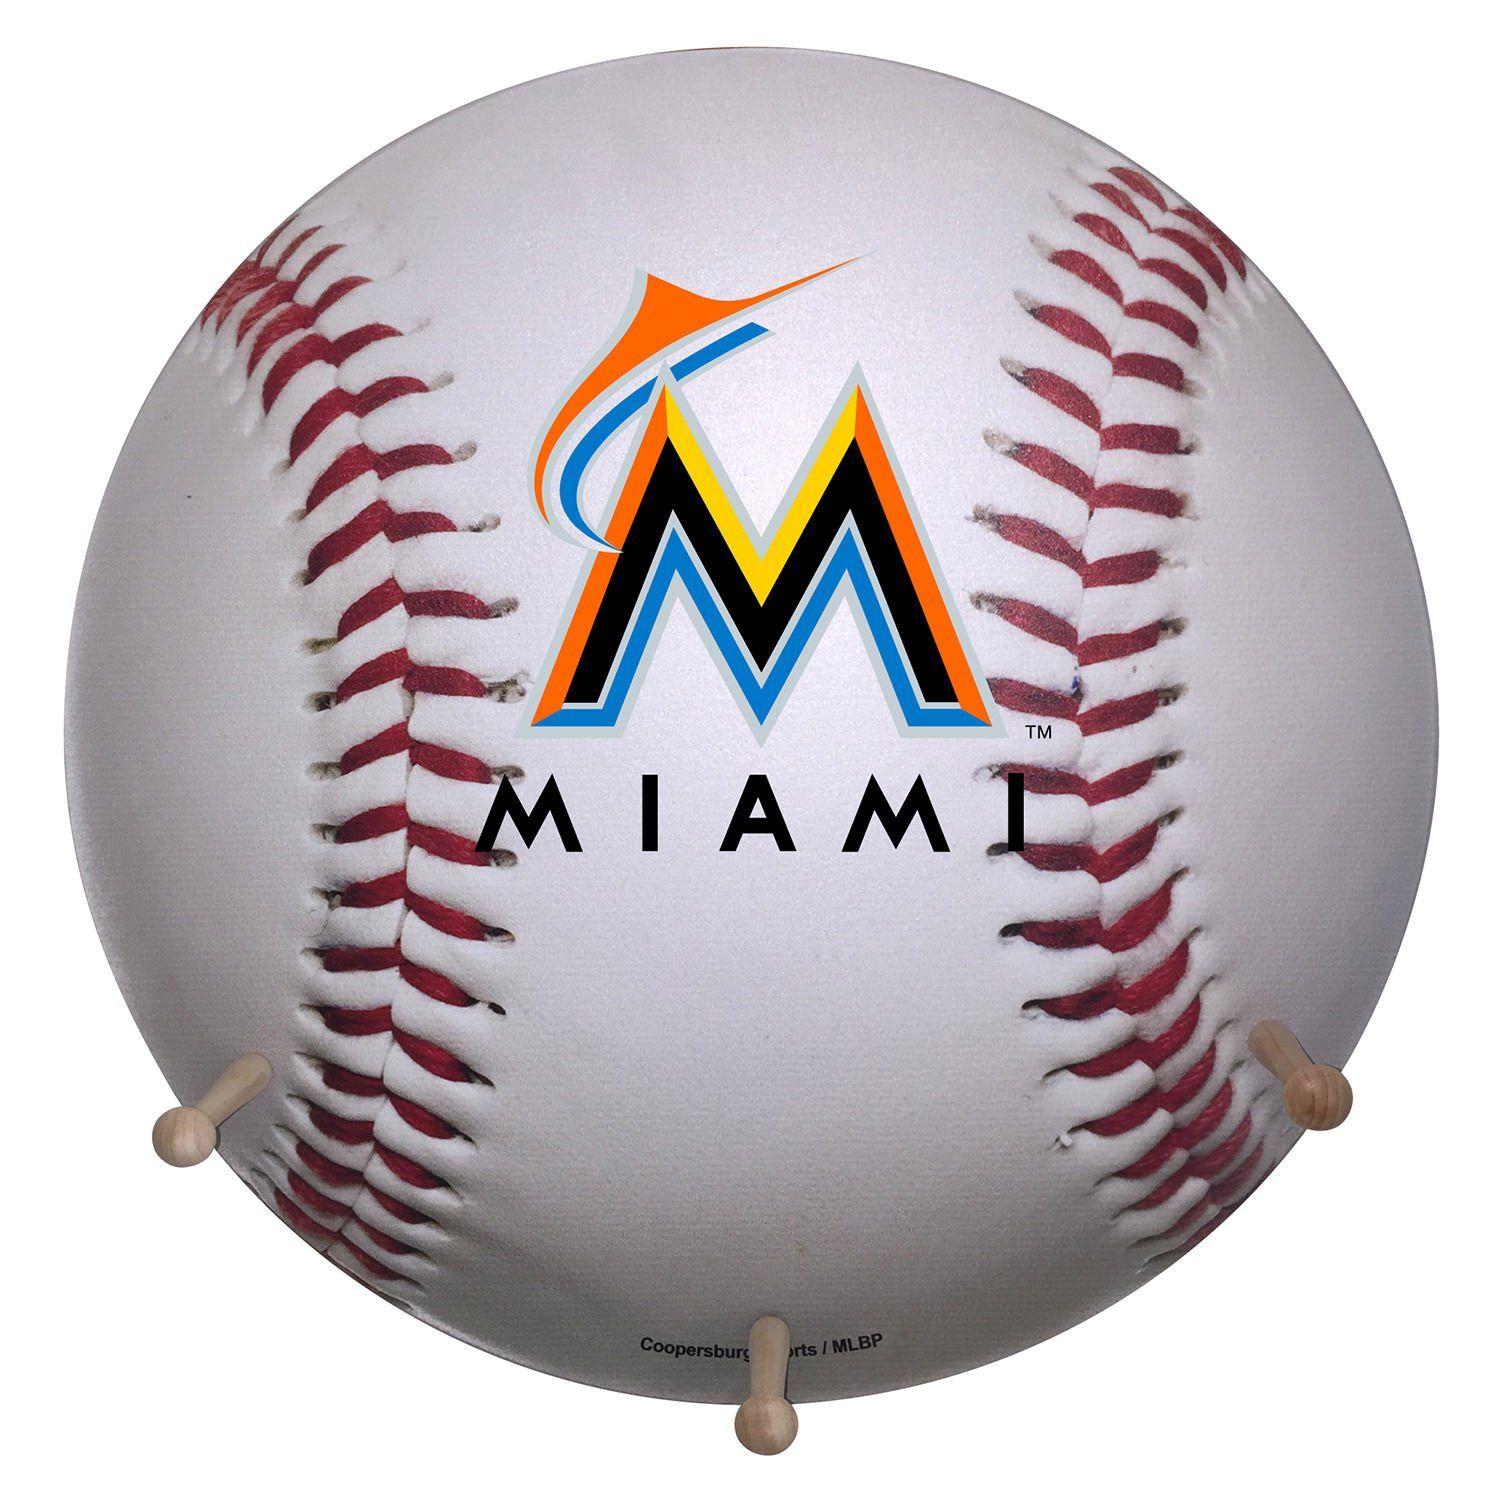 Miami Marlins Team Logo - Miami Marlins Baseball Coat Rack Team Logo | coopersburg